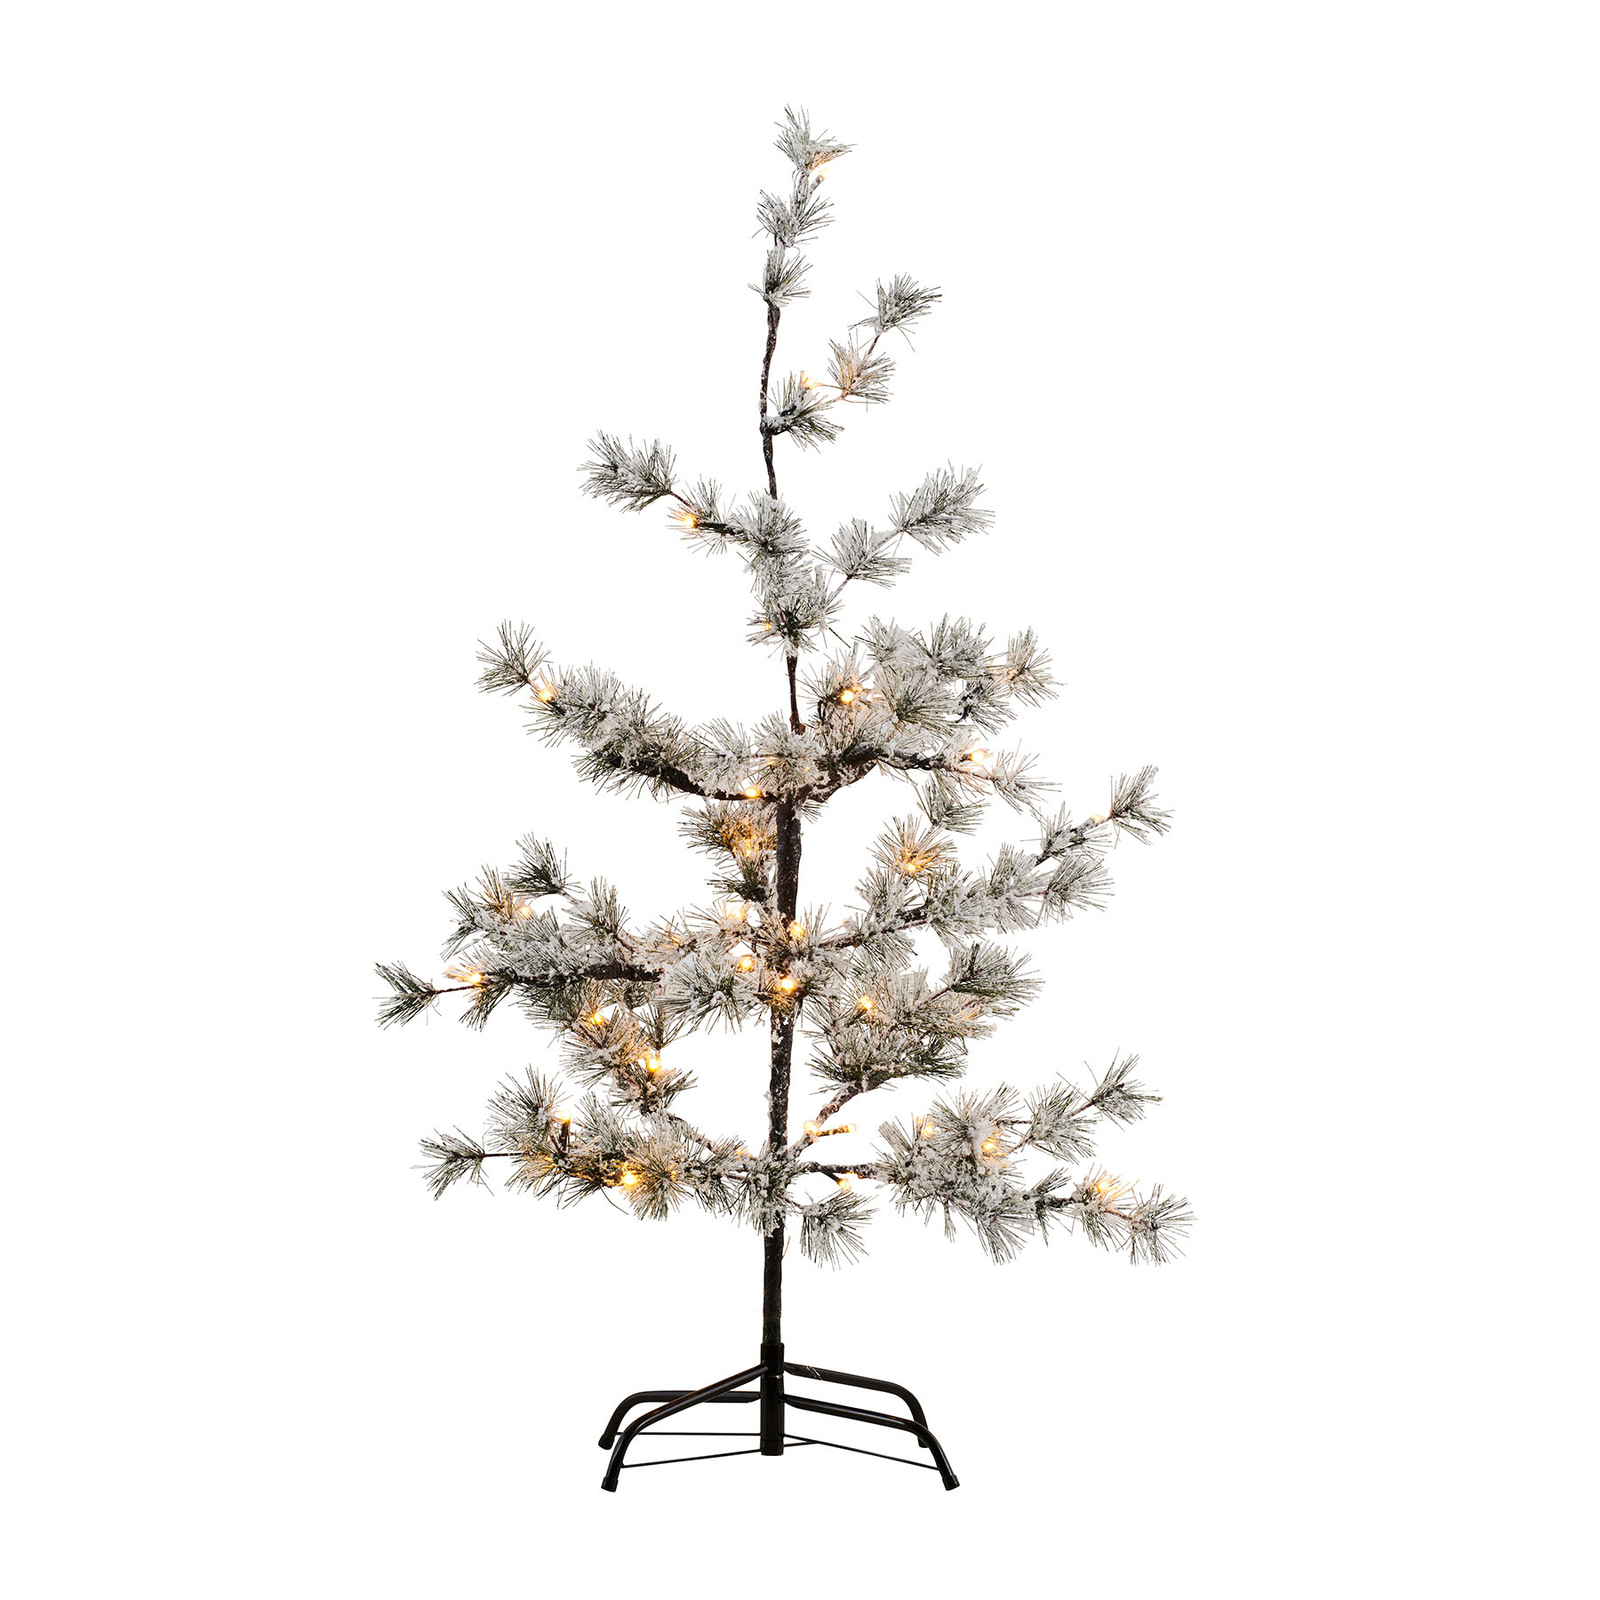 LED-puu Alfi, korkeus 90 cm, paristokäyttöinen